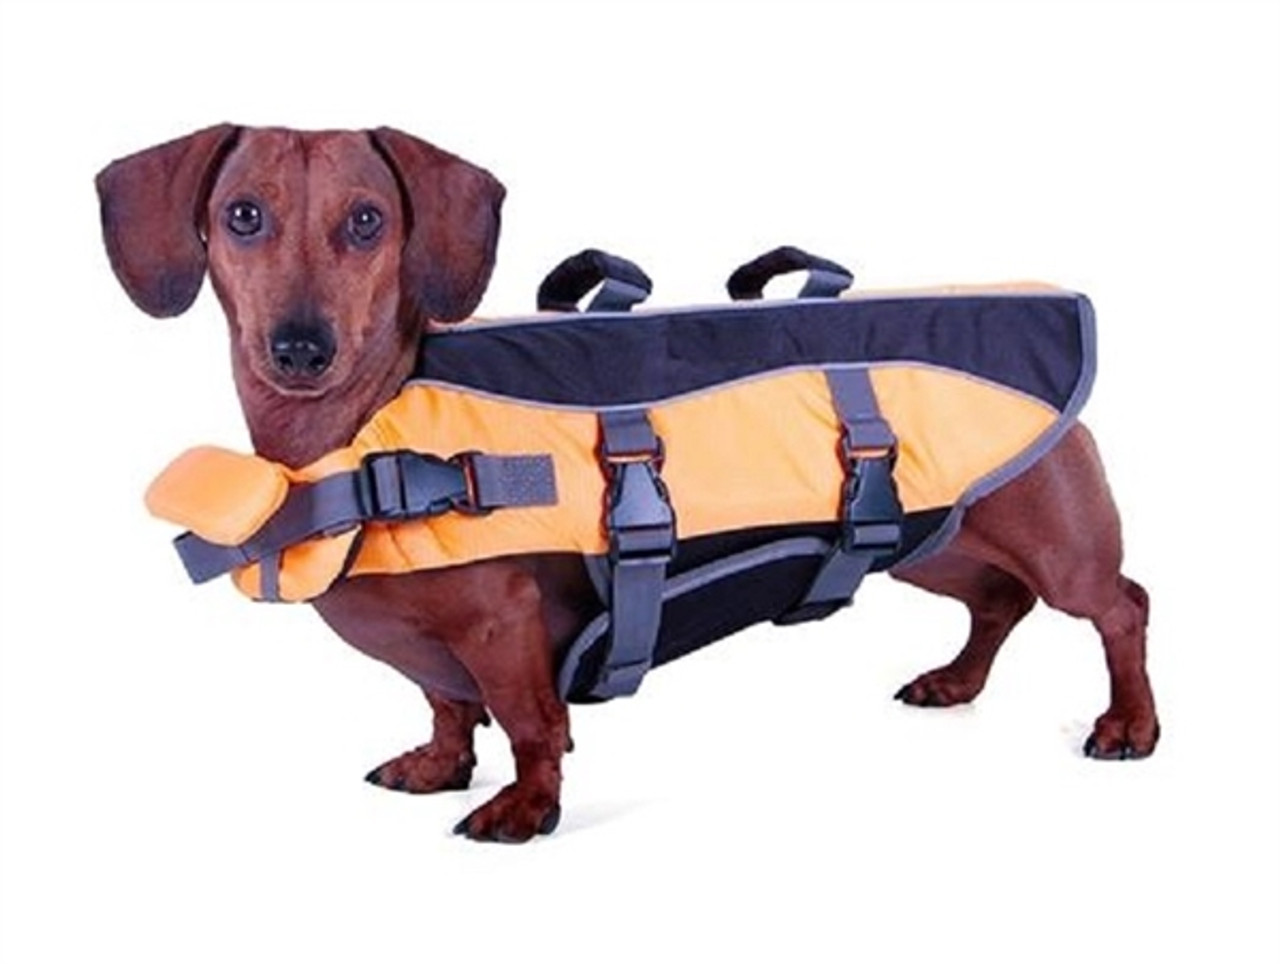 dachshund shark life jacket